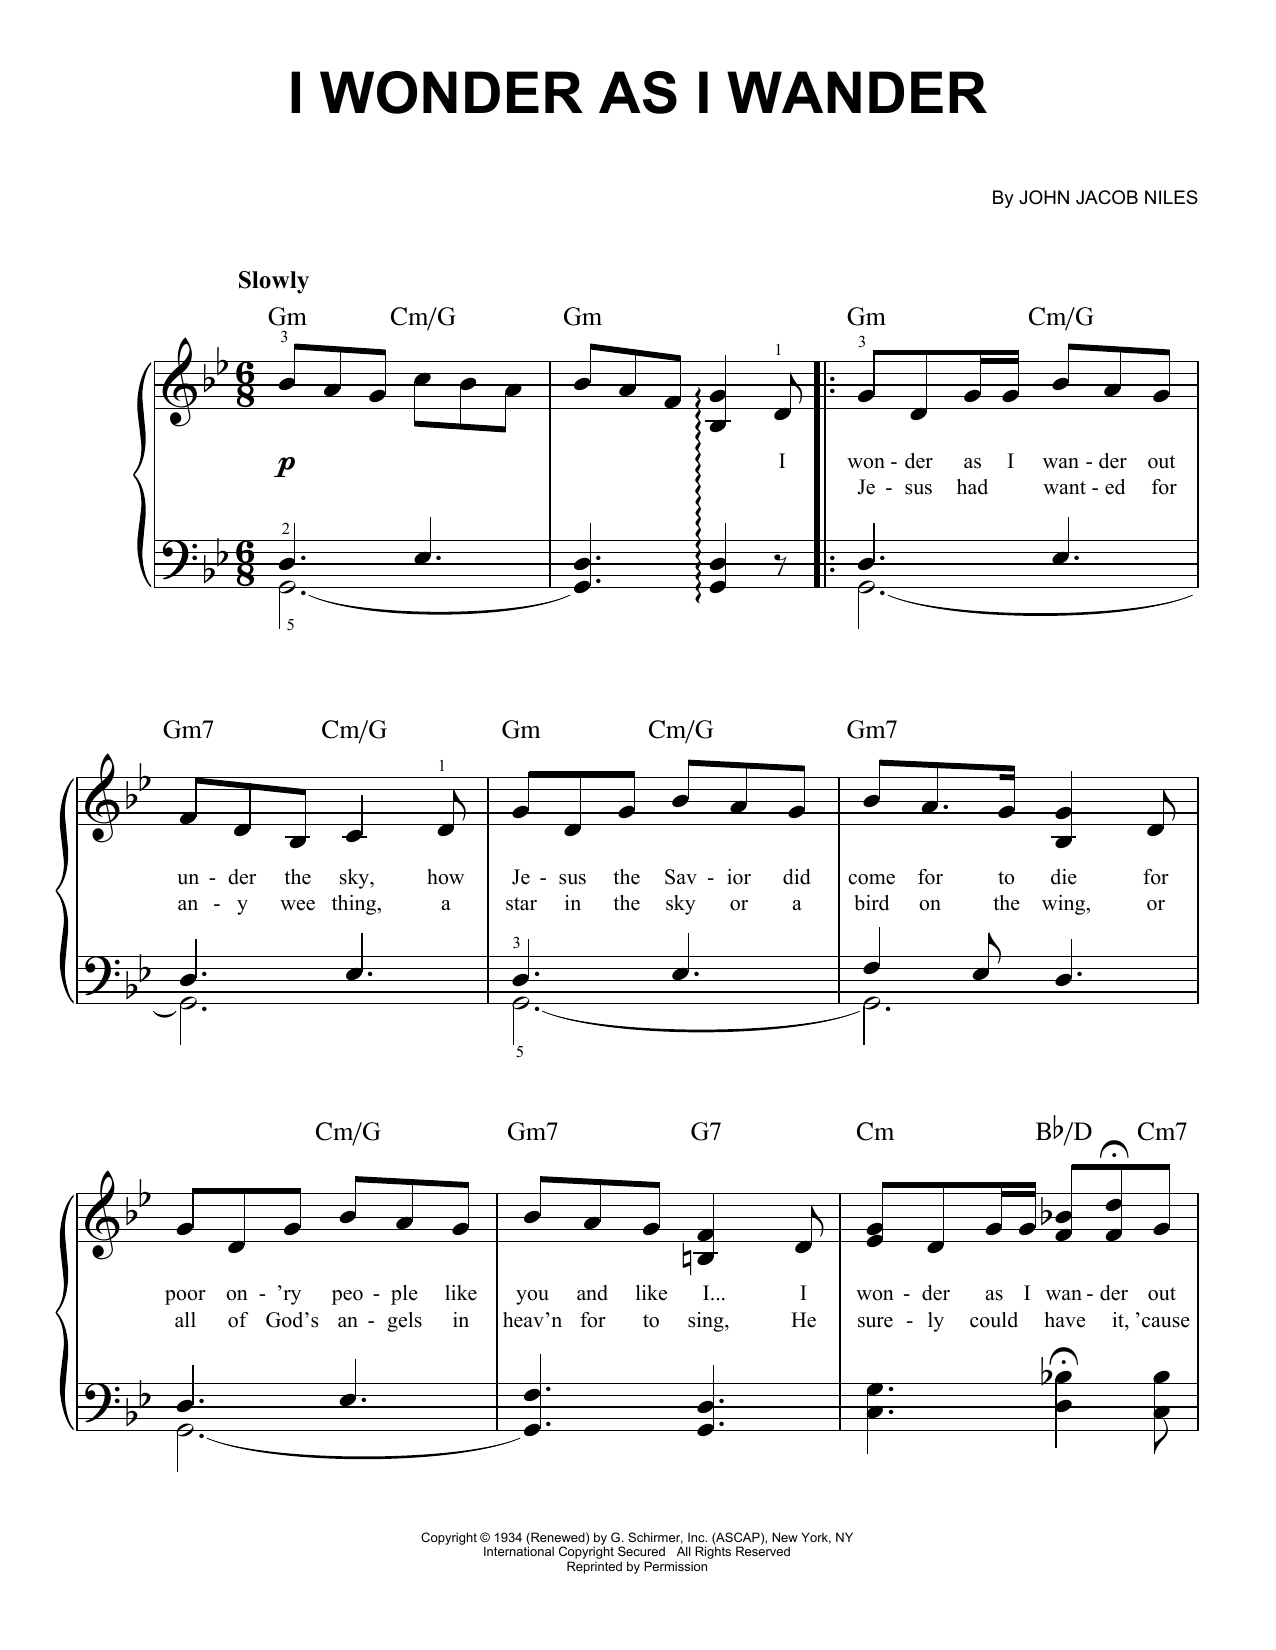 John Jacob Niles I Wonder As I Wander Sheet Music Notes & Chords for Cello and Piano - Download or Print PDF